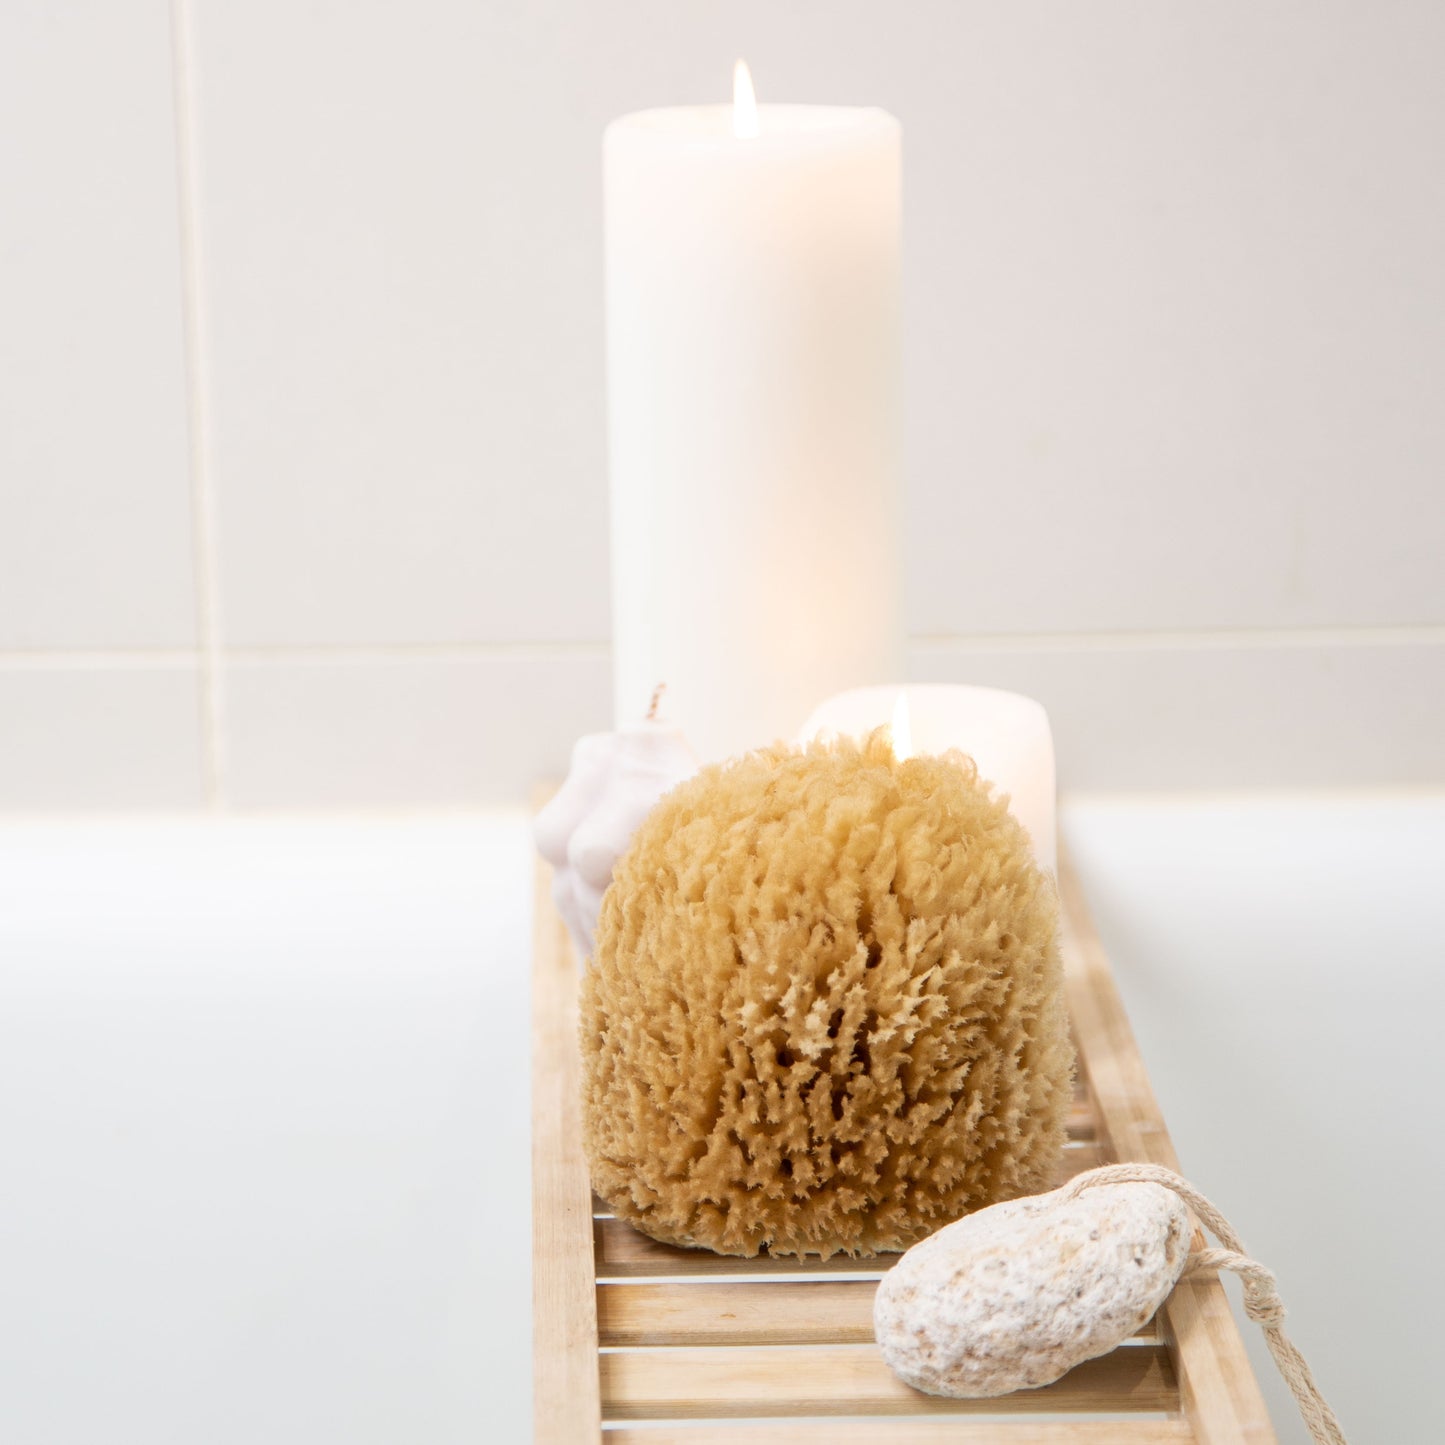 Naroa exfoliate real sea sponge on a wooden rack over a bath 